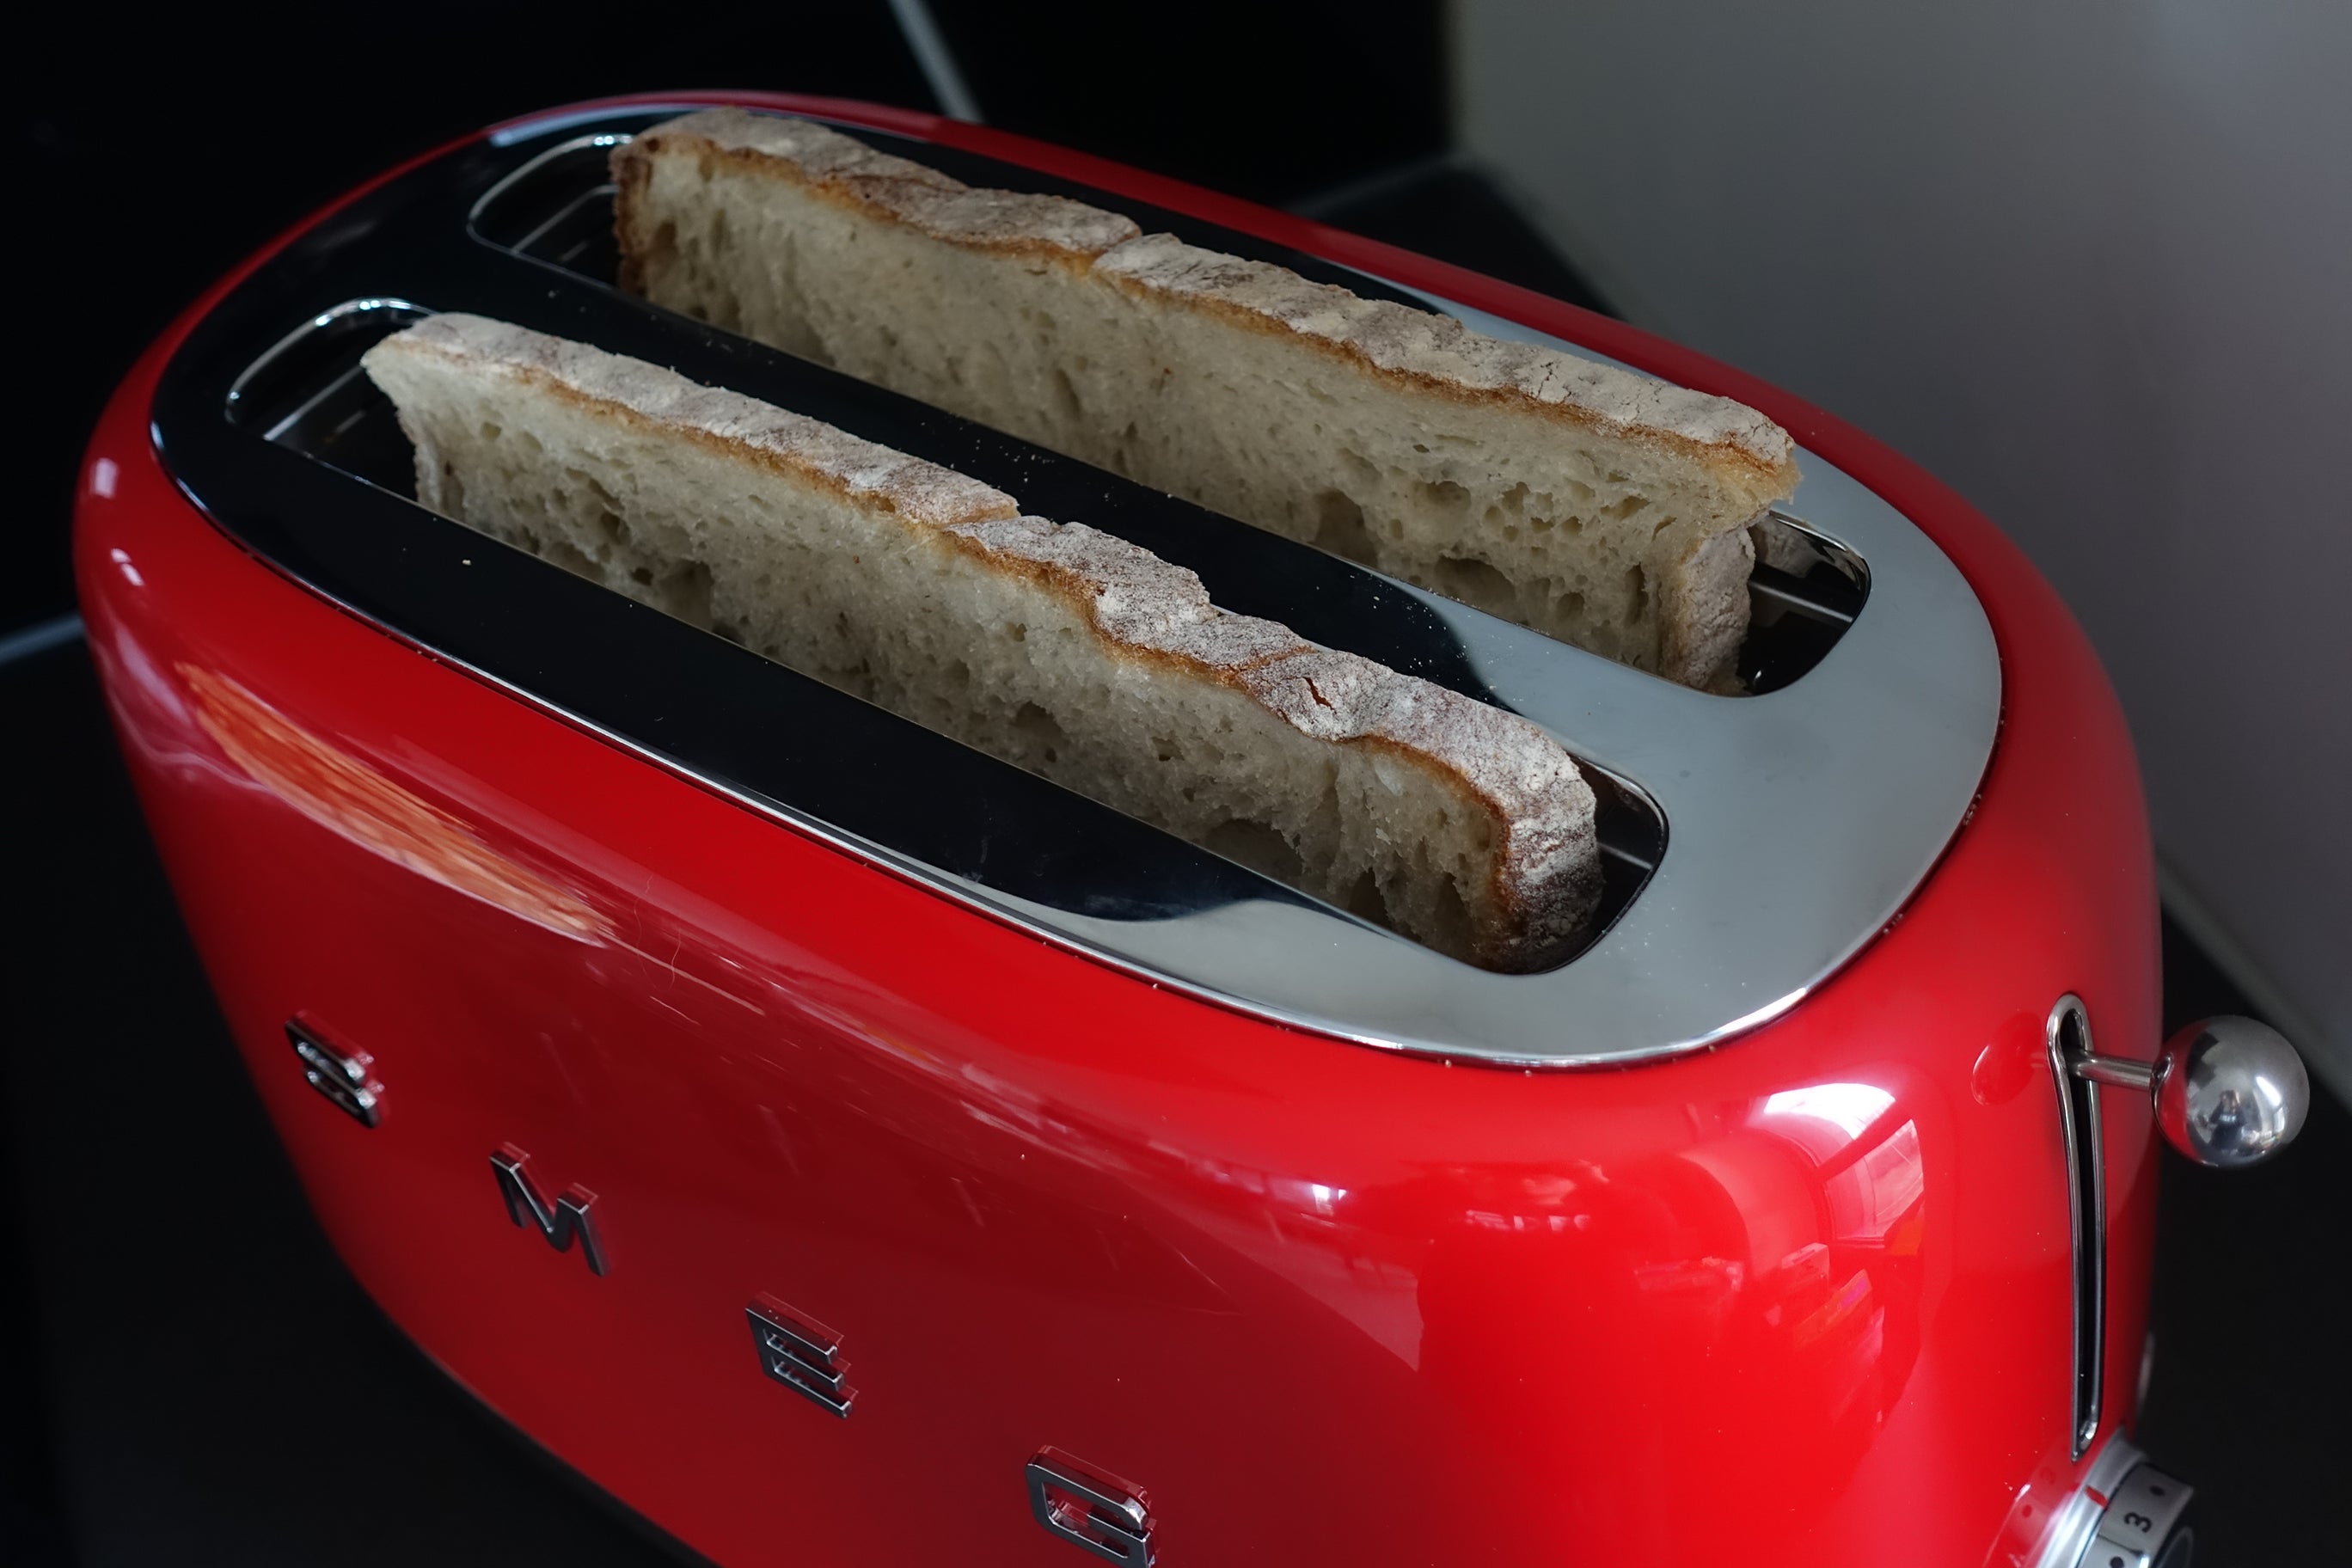 Smeg TSF02 4-Slice toaster